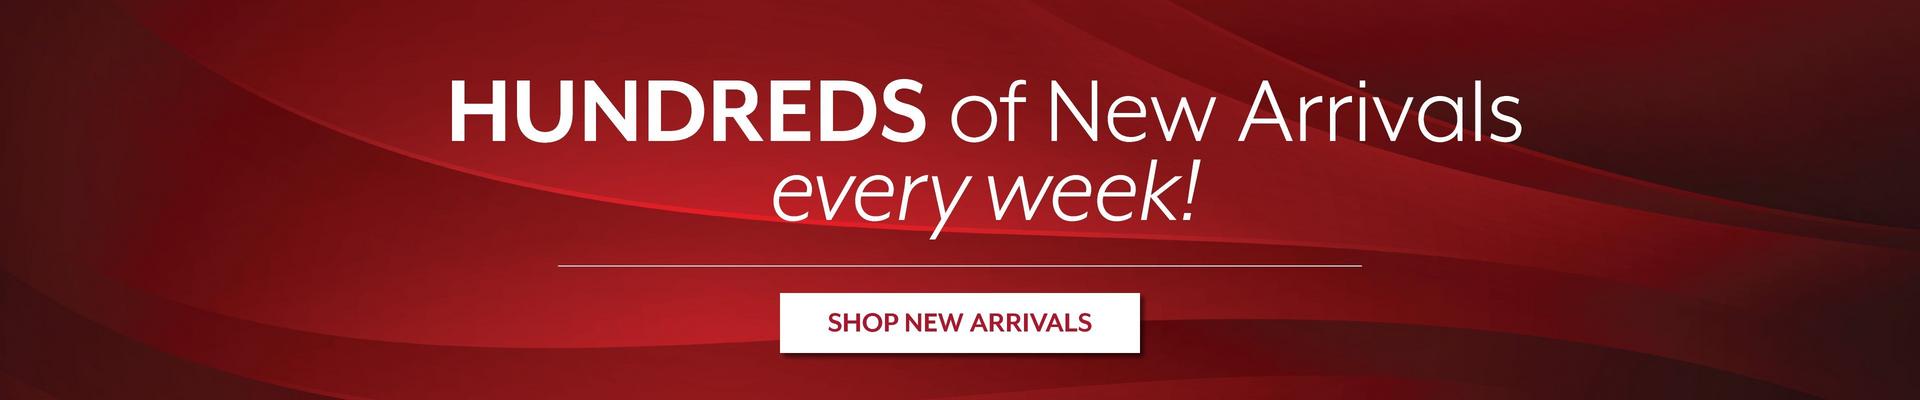 Shop hundreds of new arrivals every week at bealls.com